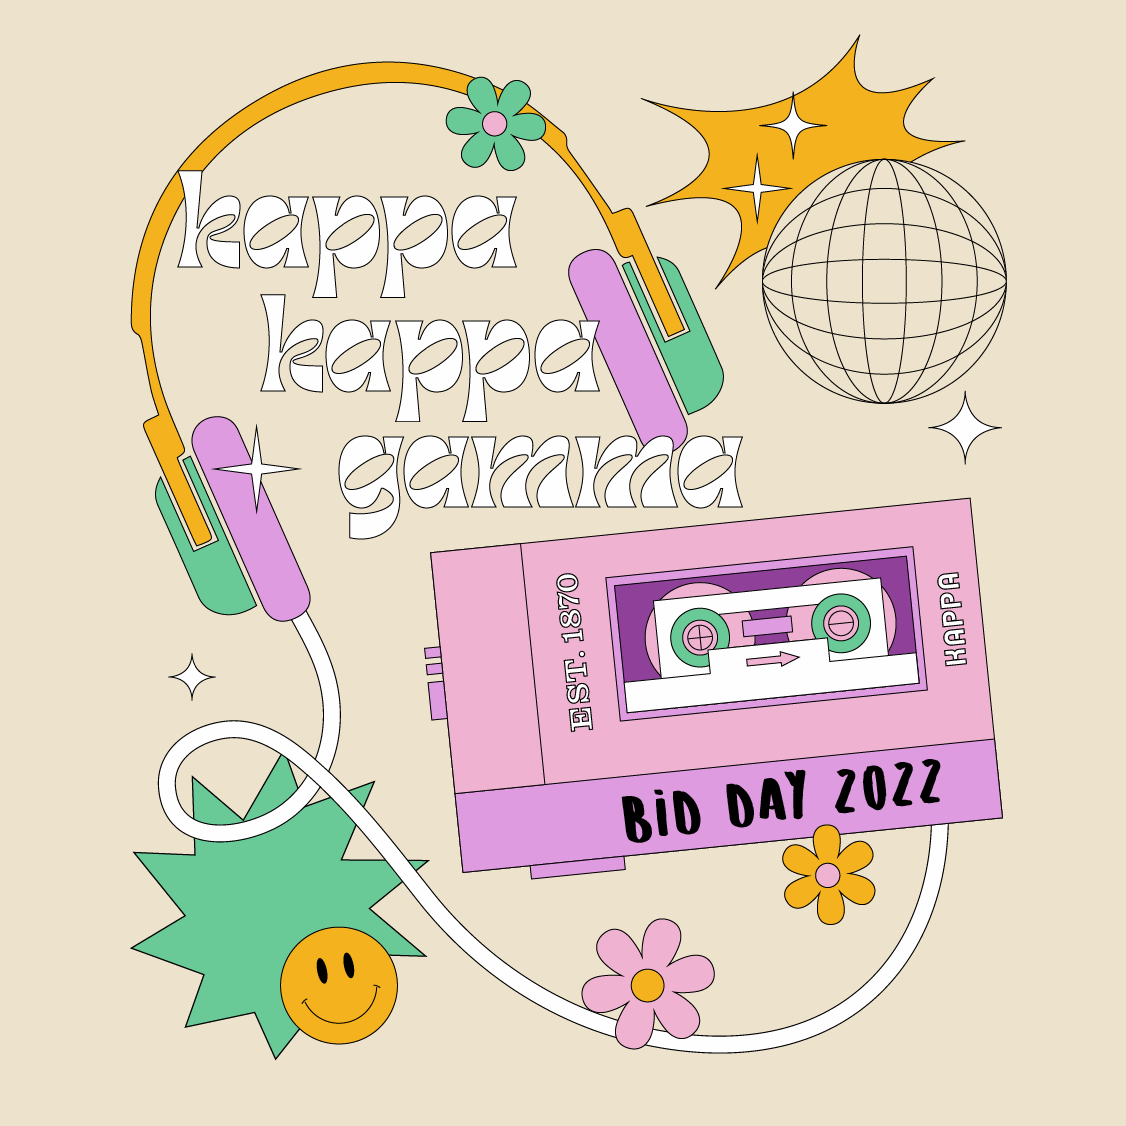 Kappa Kappa Gamma Bid Day 90s Retro Line Art Smiley Flower Headphones Walkman-01.png